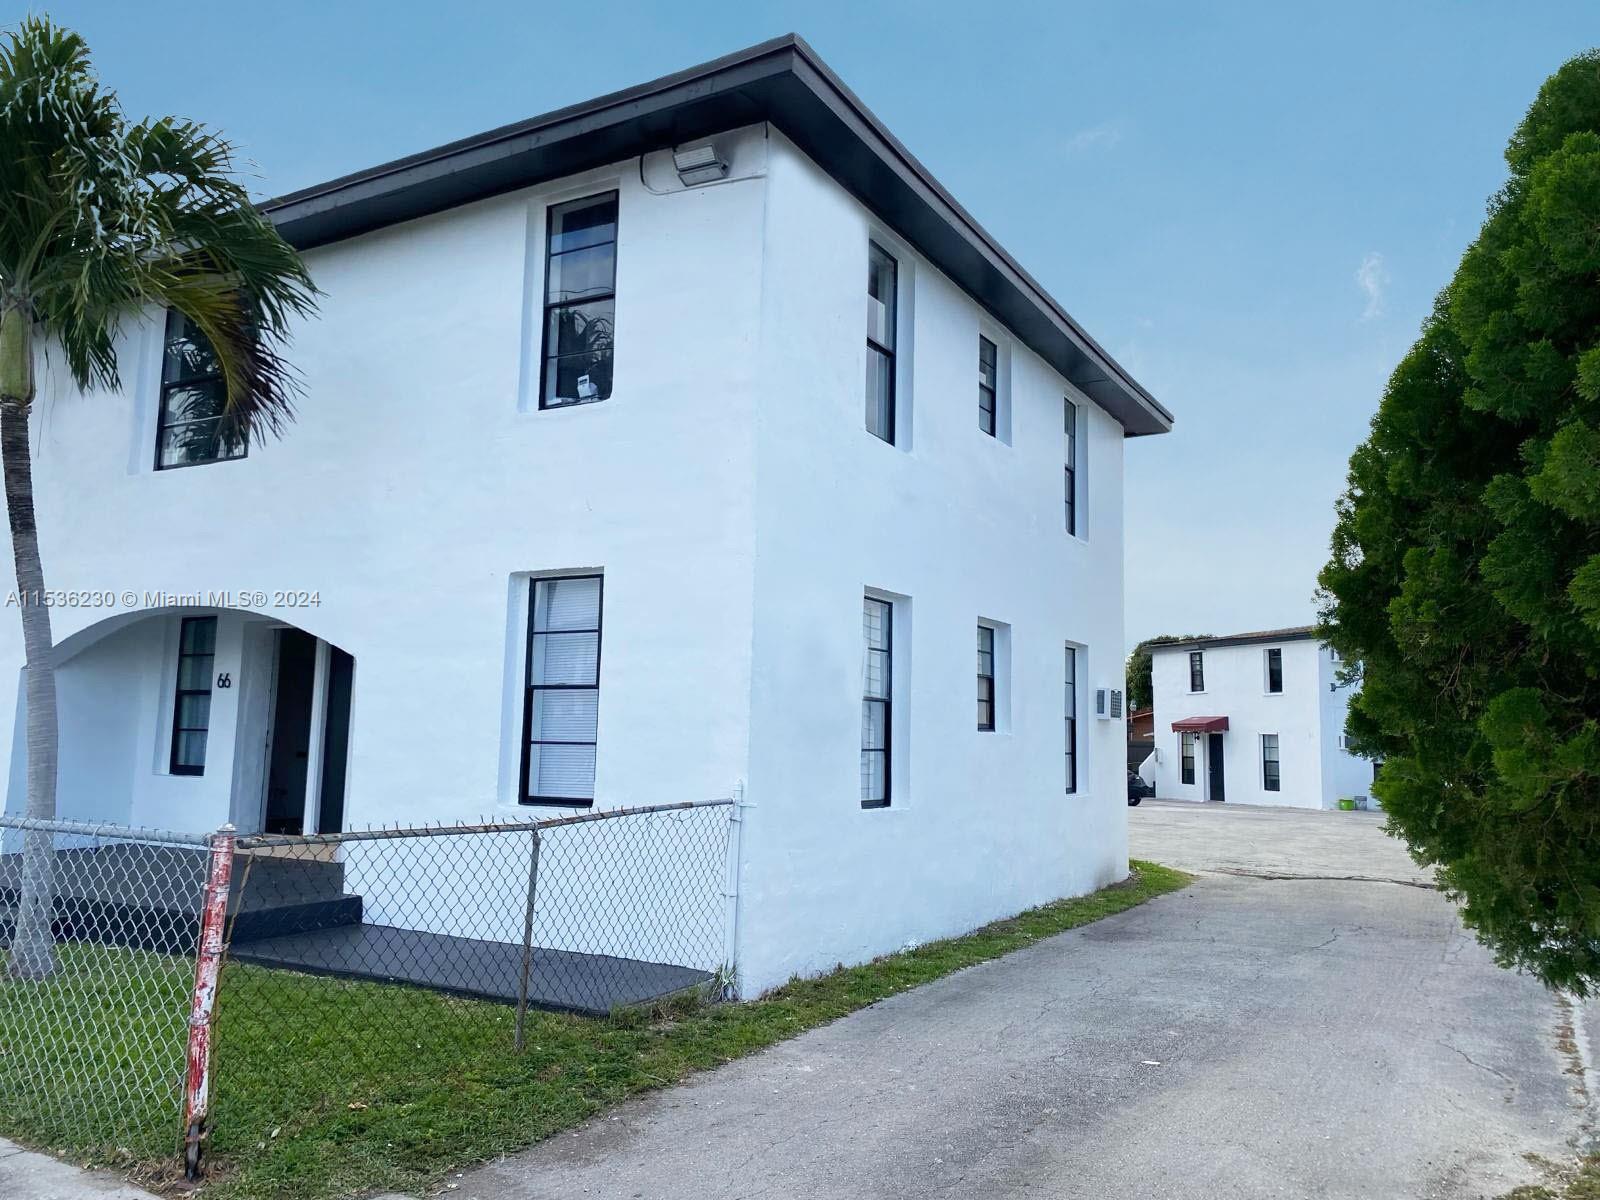 Rental Property at 66 W 13th St, Hialeah, Miami-Dade County, Florida -  - $2,730,000 MO.